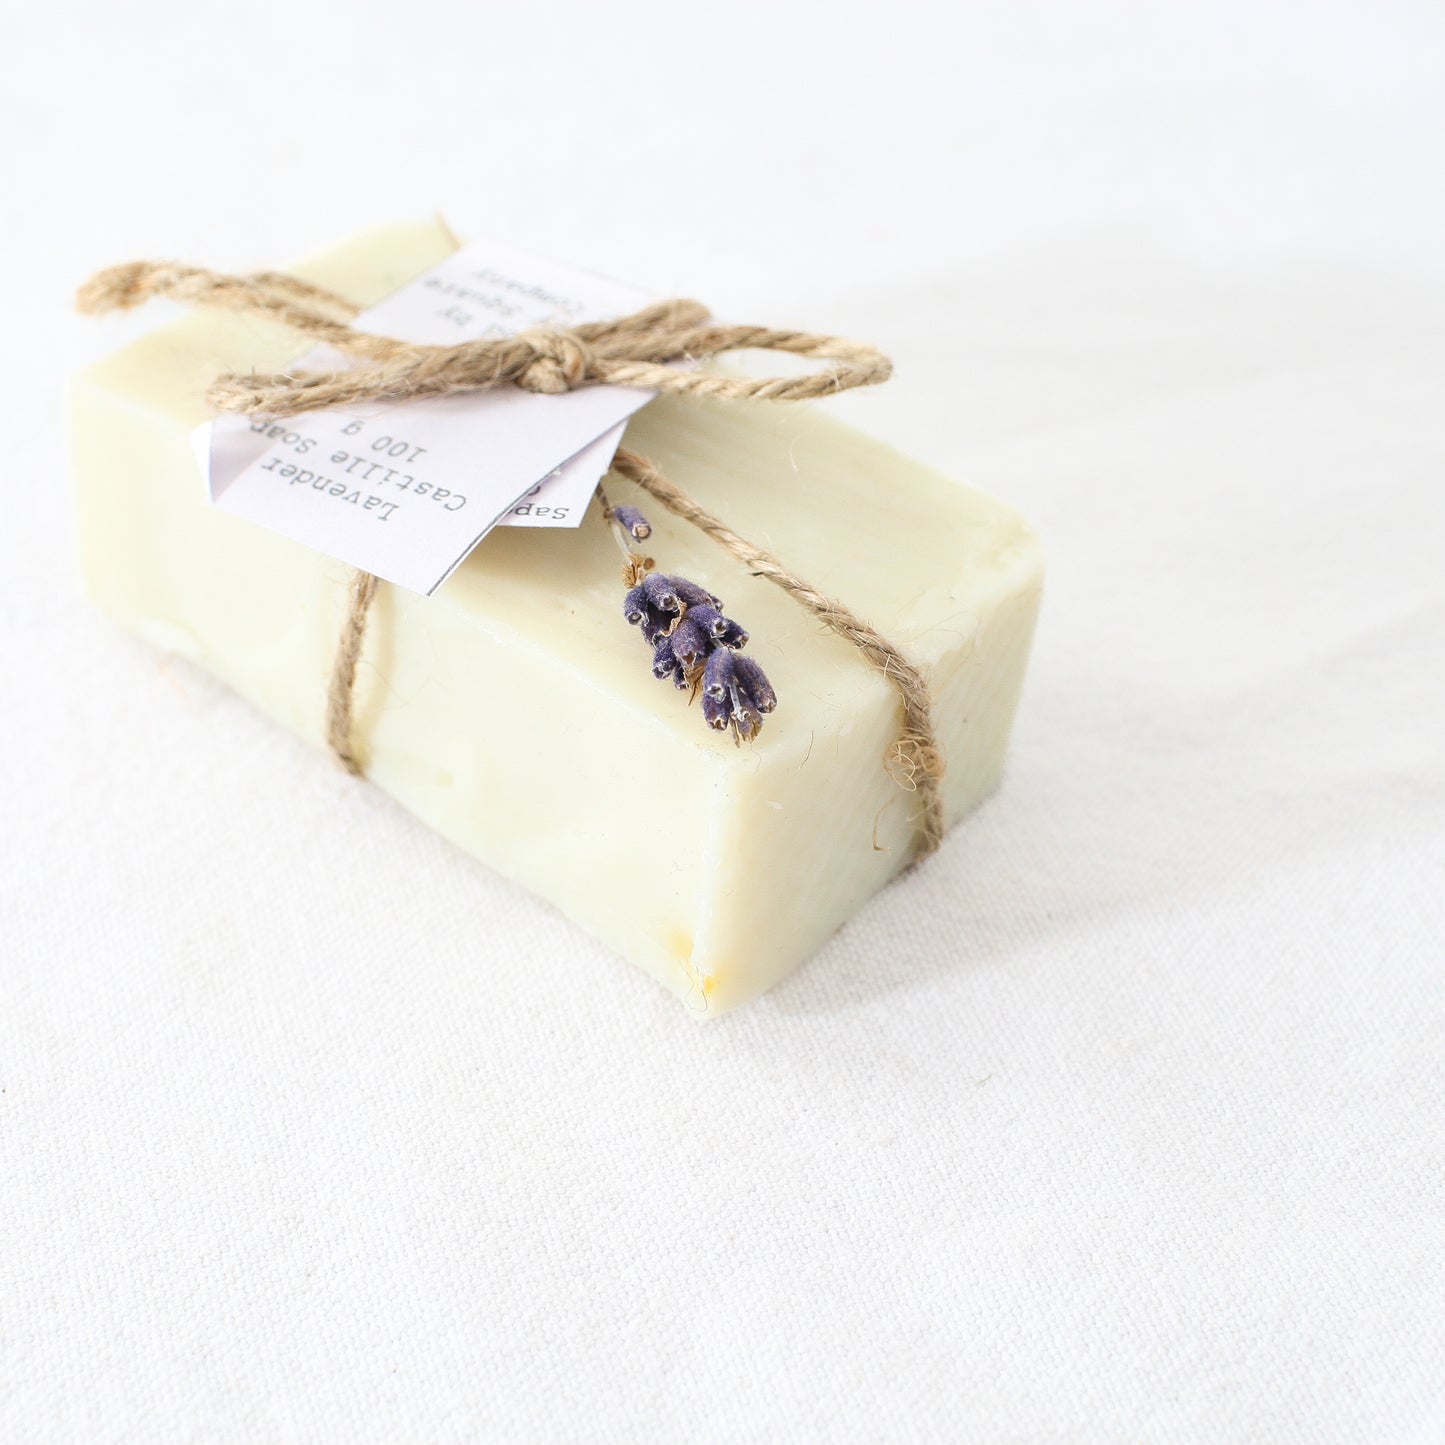 Lavender Castille Soap